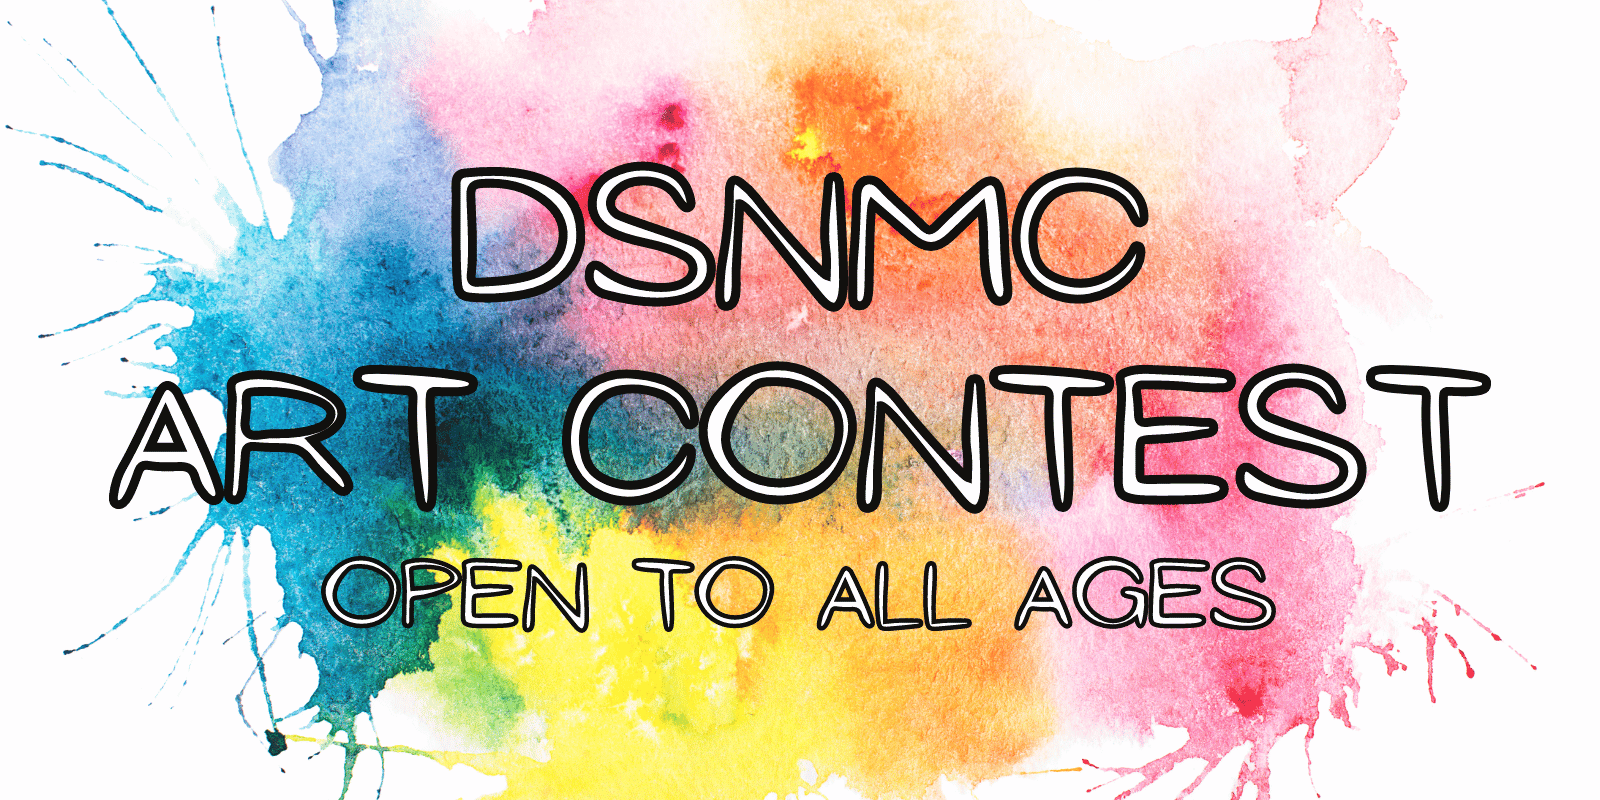 DSNMC Art Contest